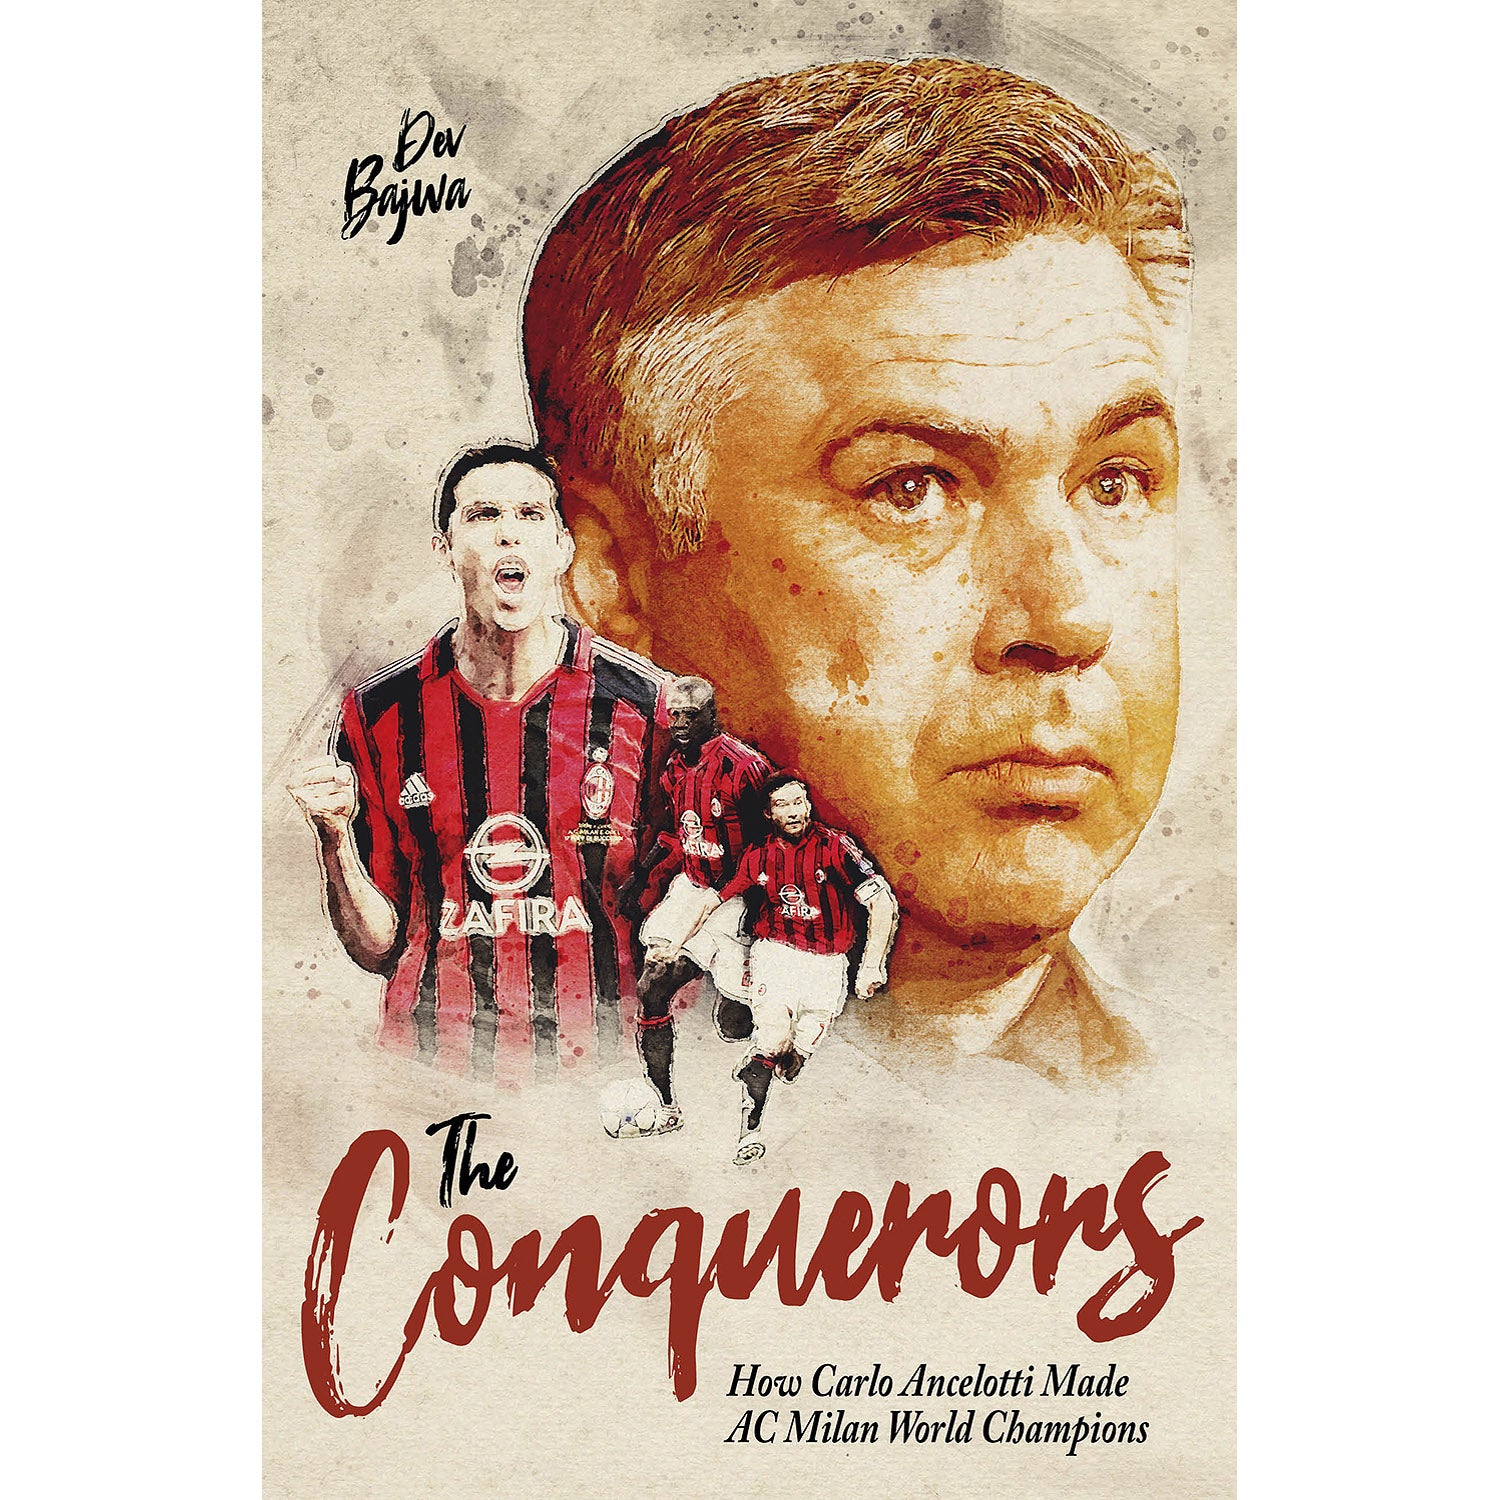 The Conquerors – How Carlo Ancelotti Made AC Milan World Champions